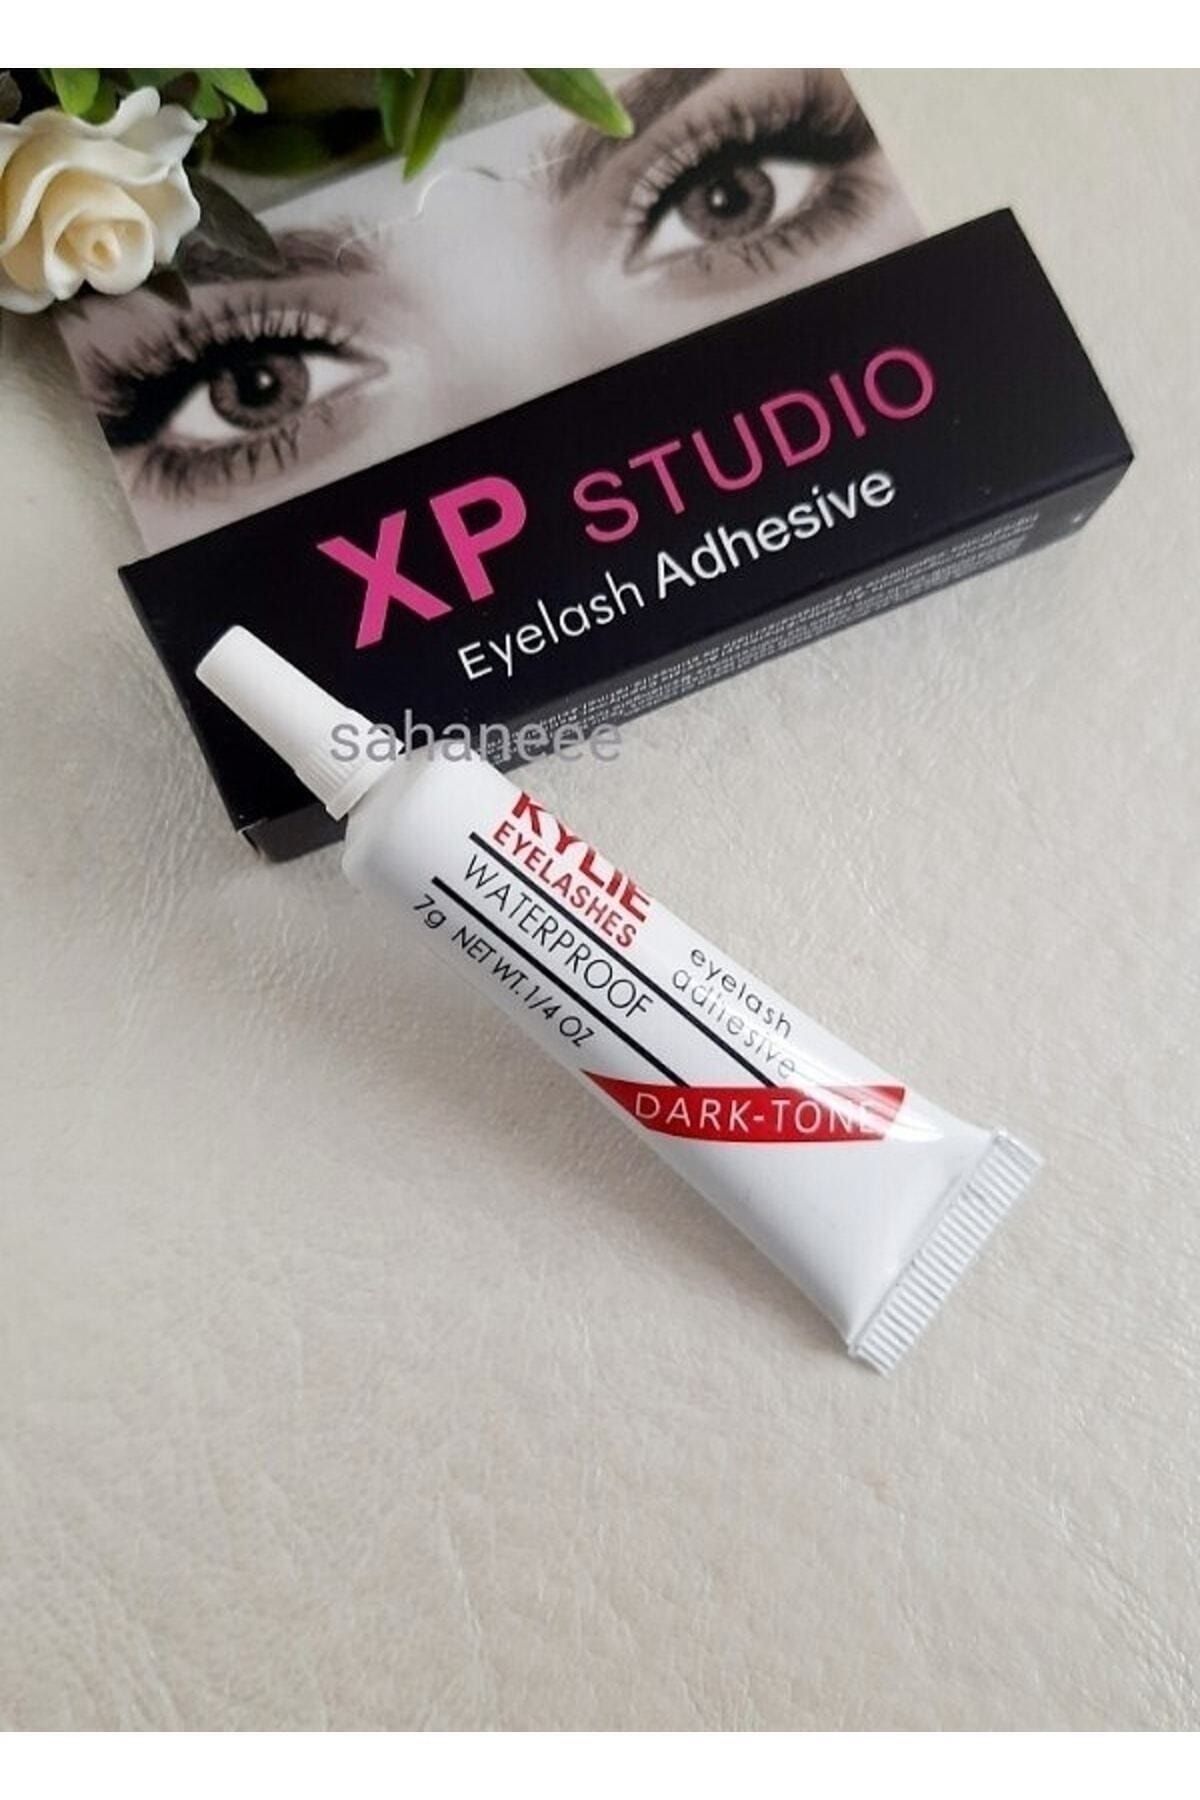 xp Studio Eyelash Adhesive